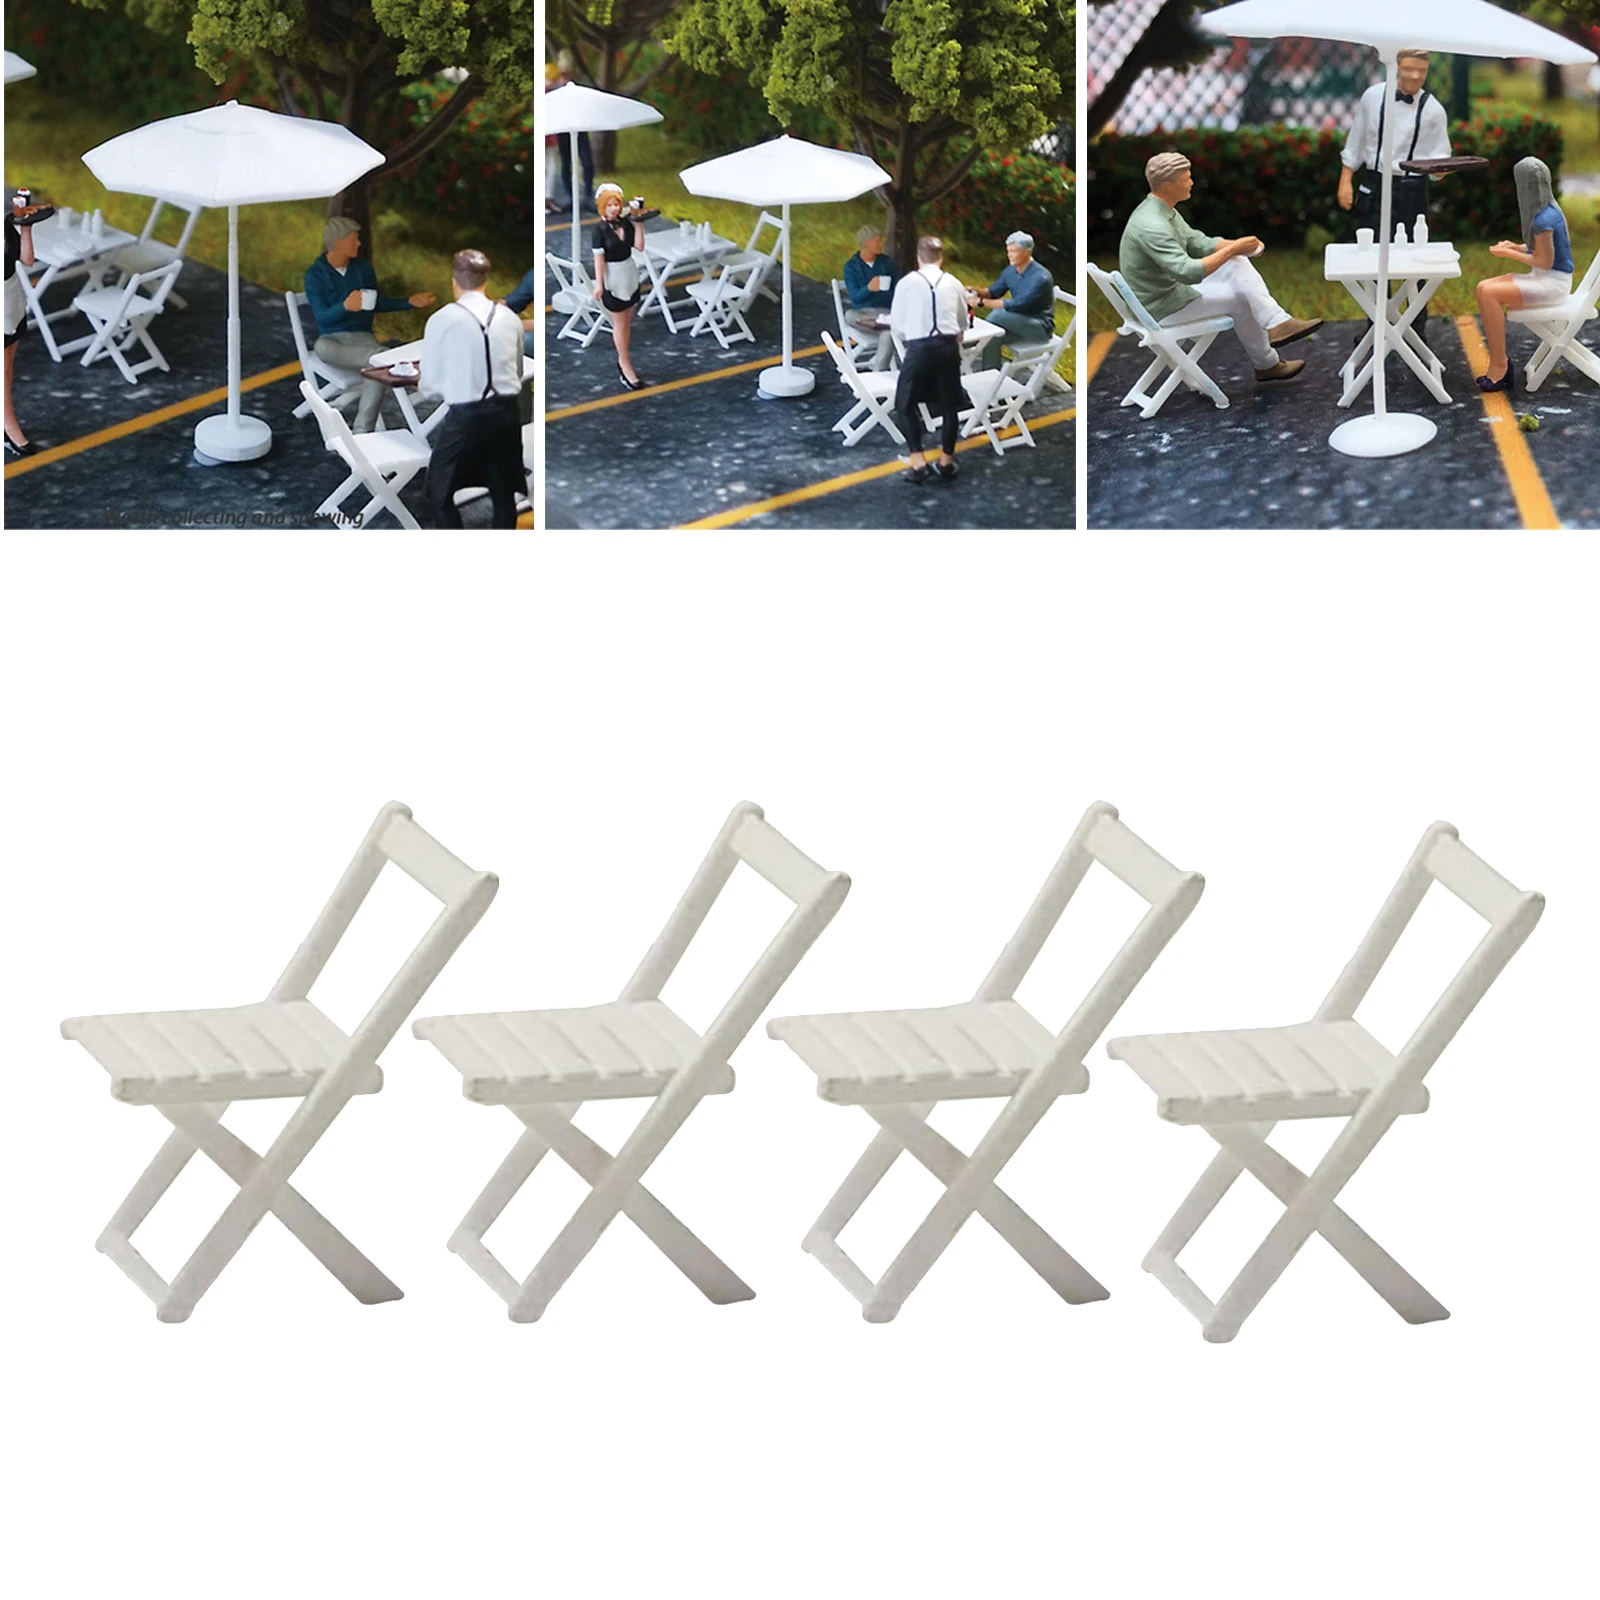 4pcs 1:64 Scale Mini Tiny Chairs Scenery Scenario for  Decoration